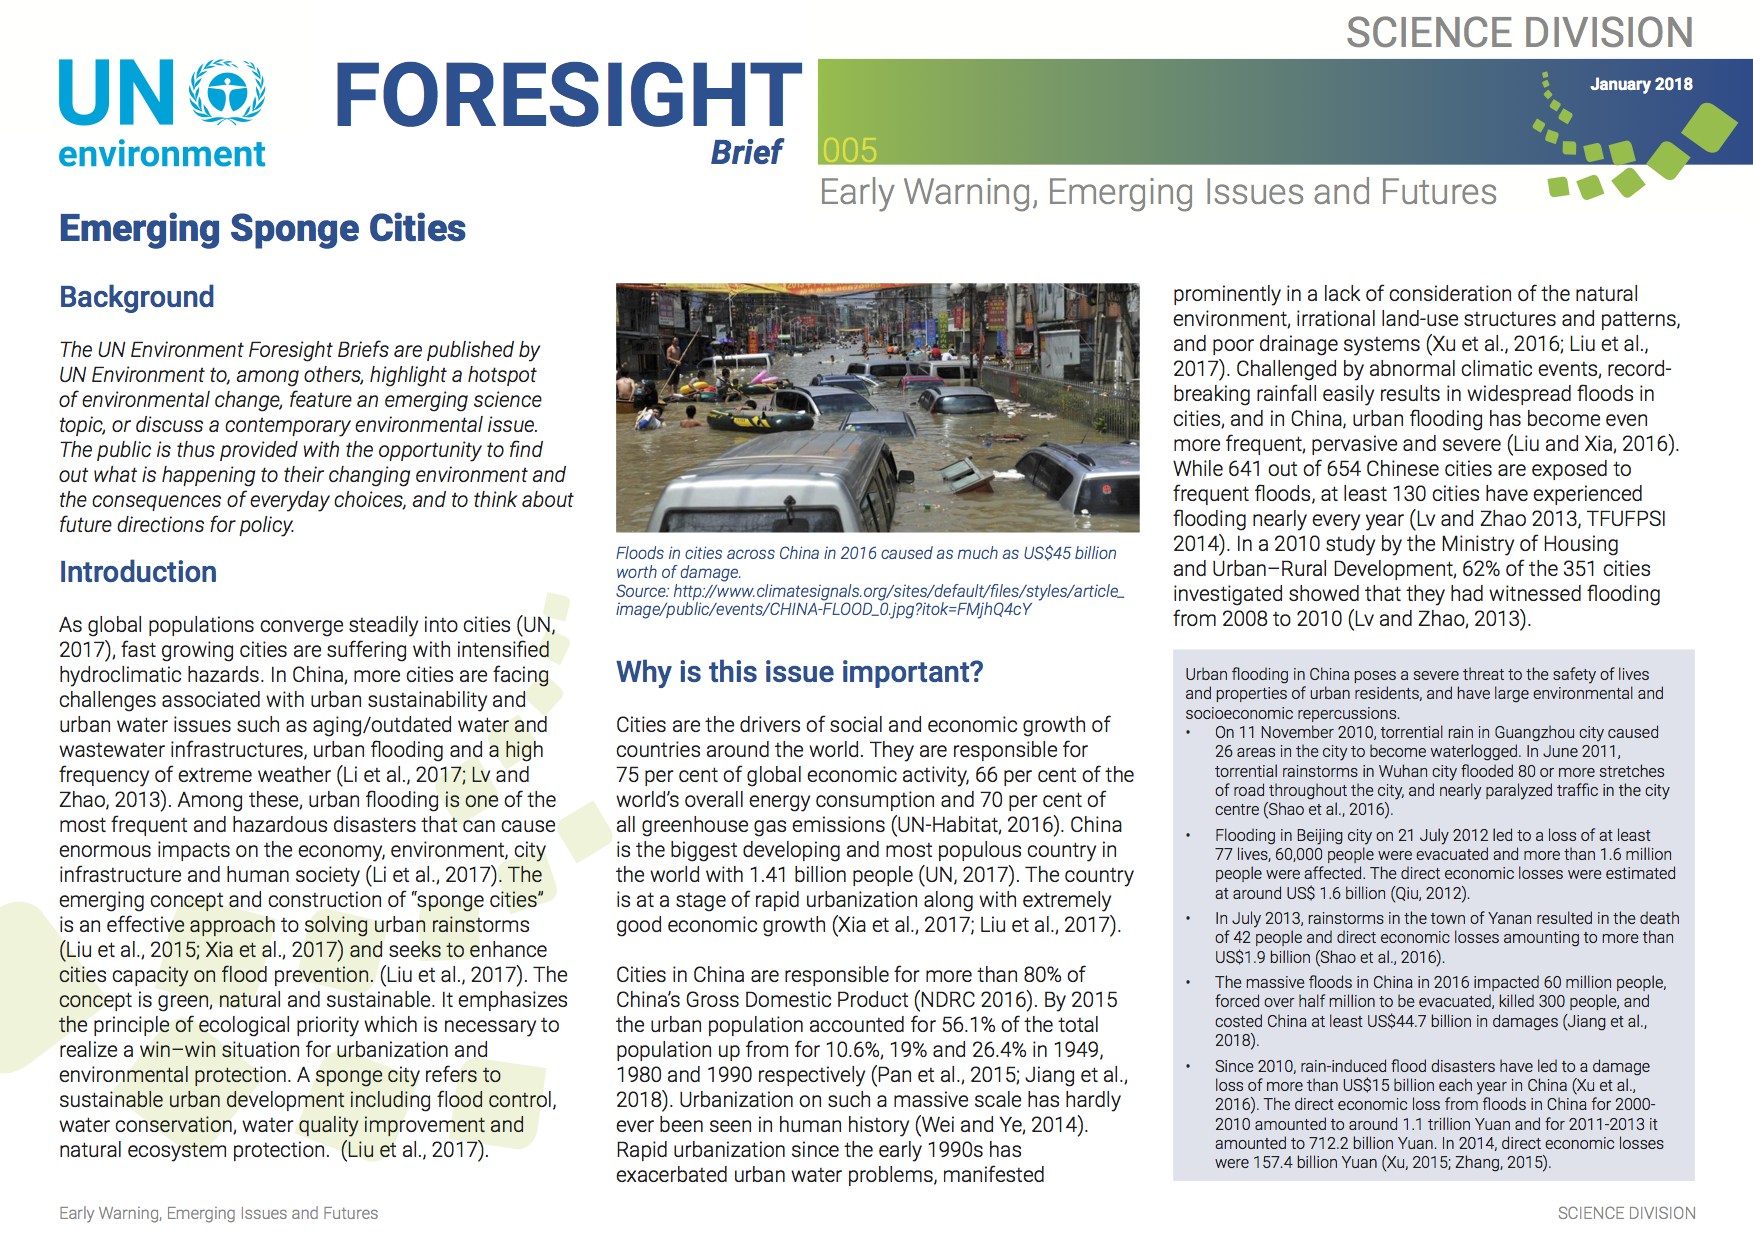 Foresight Brief: Emerging Sponge Cities (UNEP)